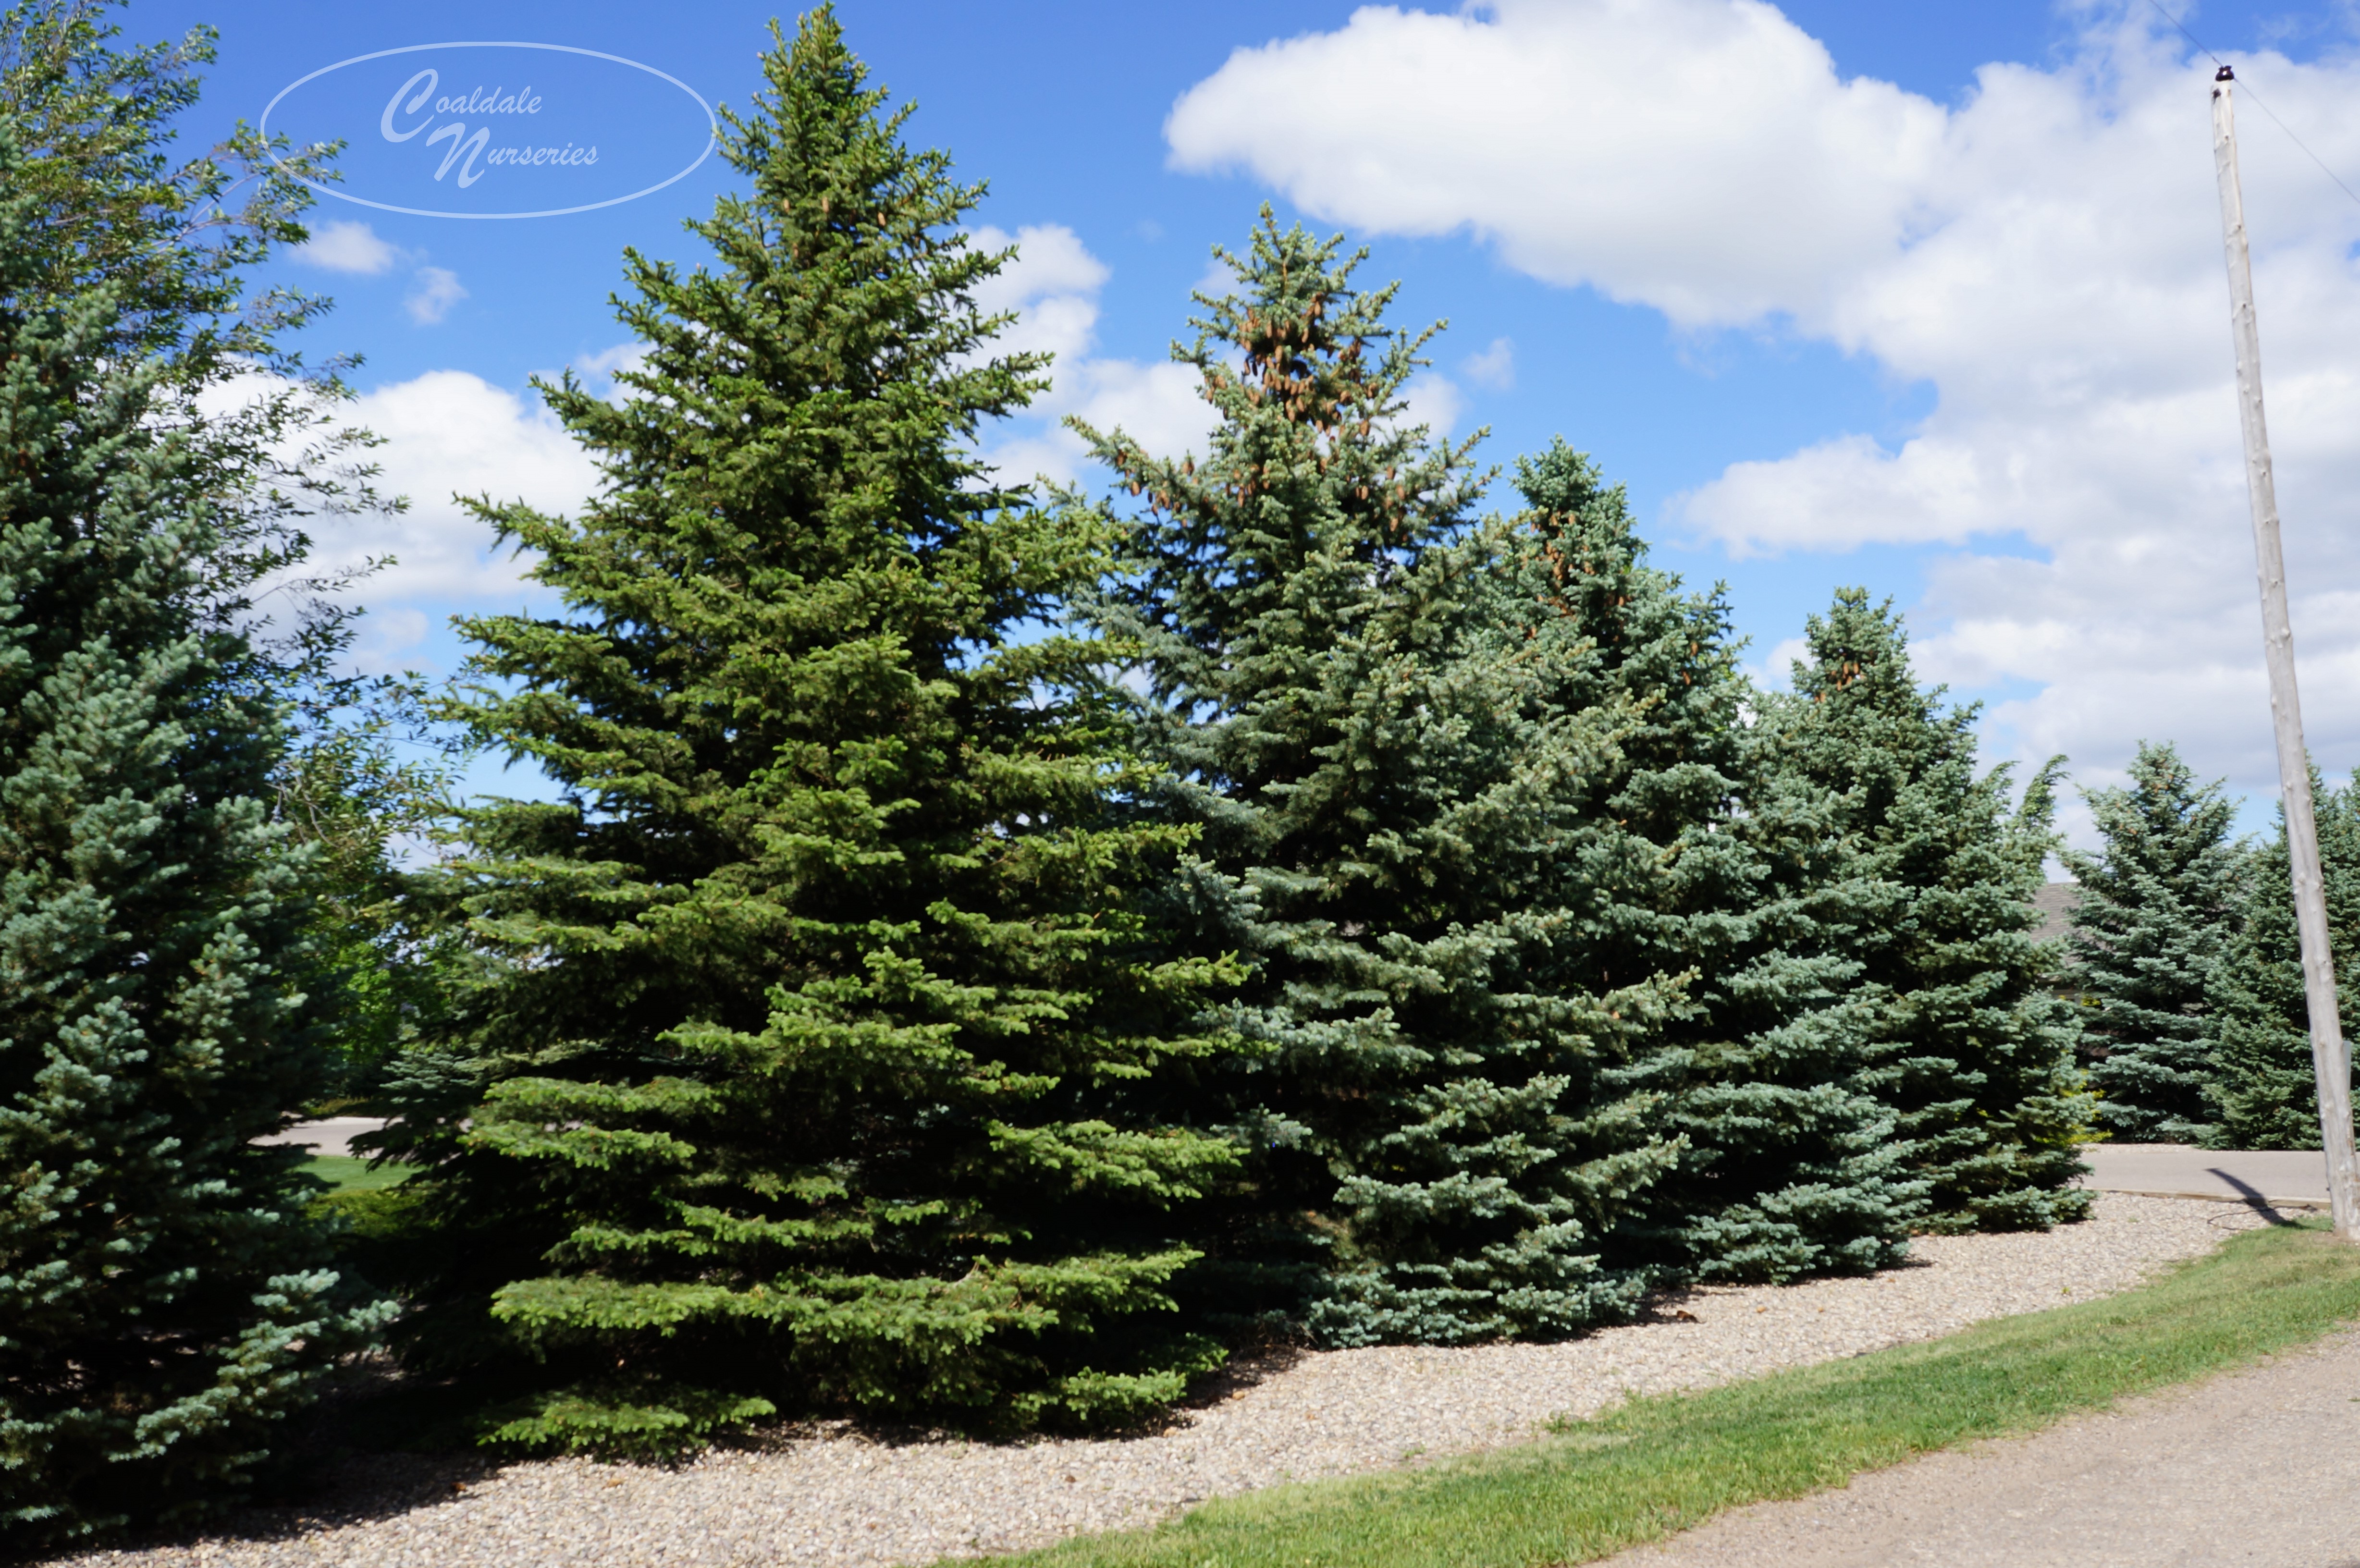 Colorado Spruce (Green or Blue)-image